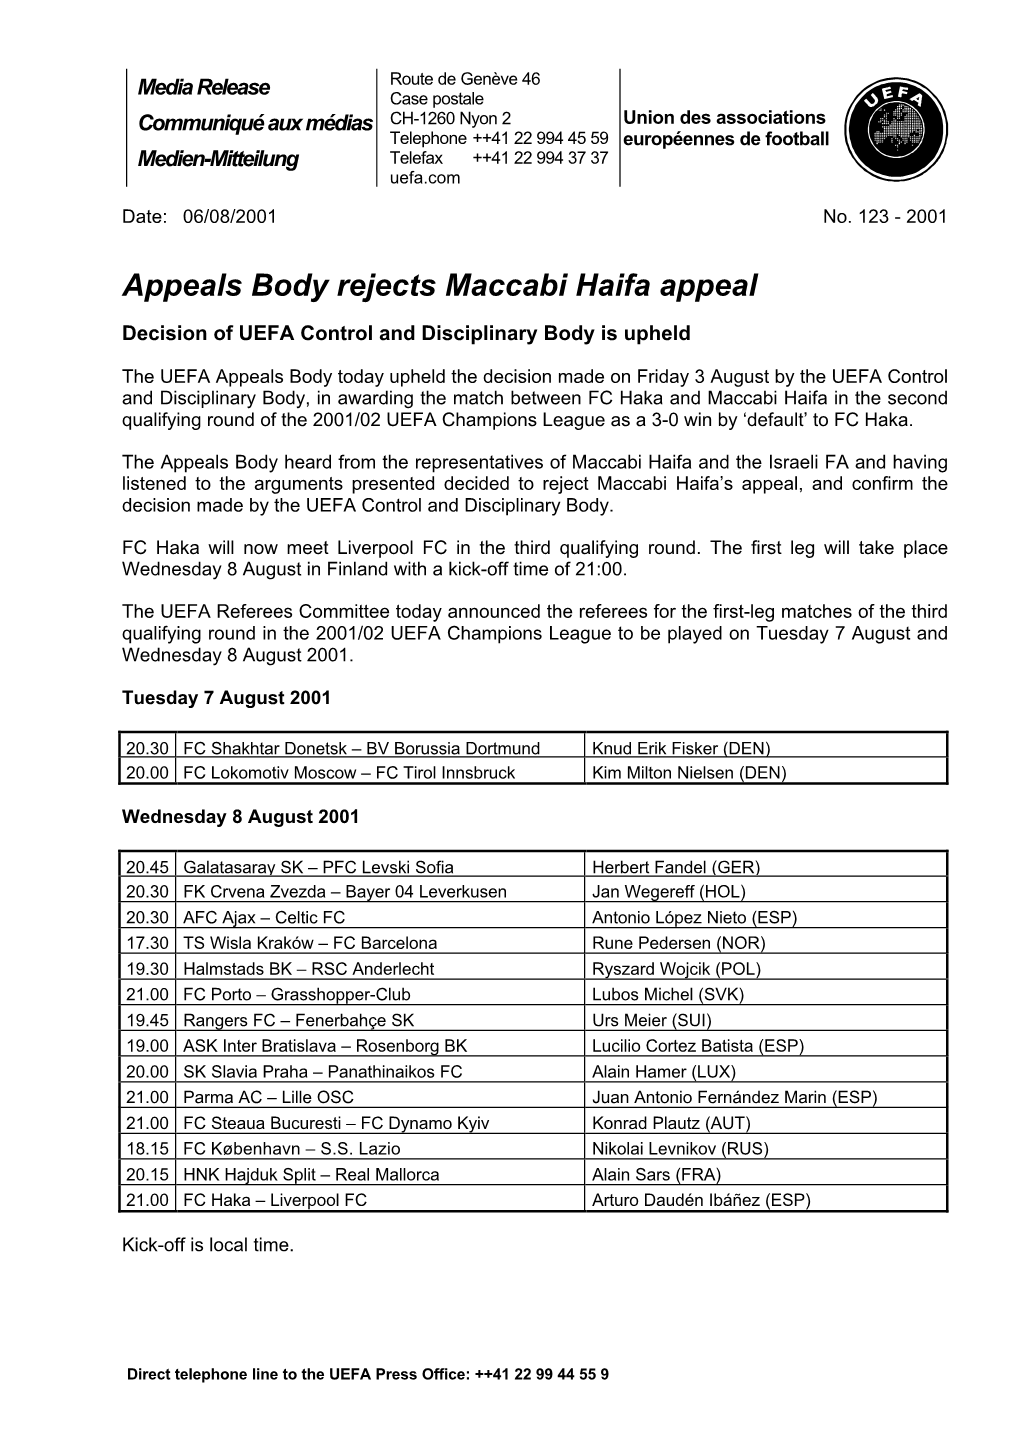 Appeals Body Rejects Maccabi Haifa Appeal